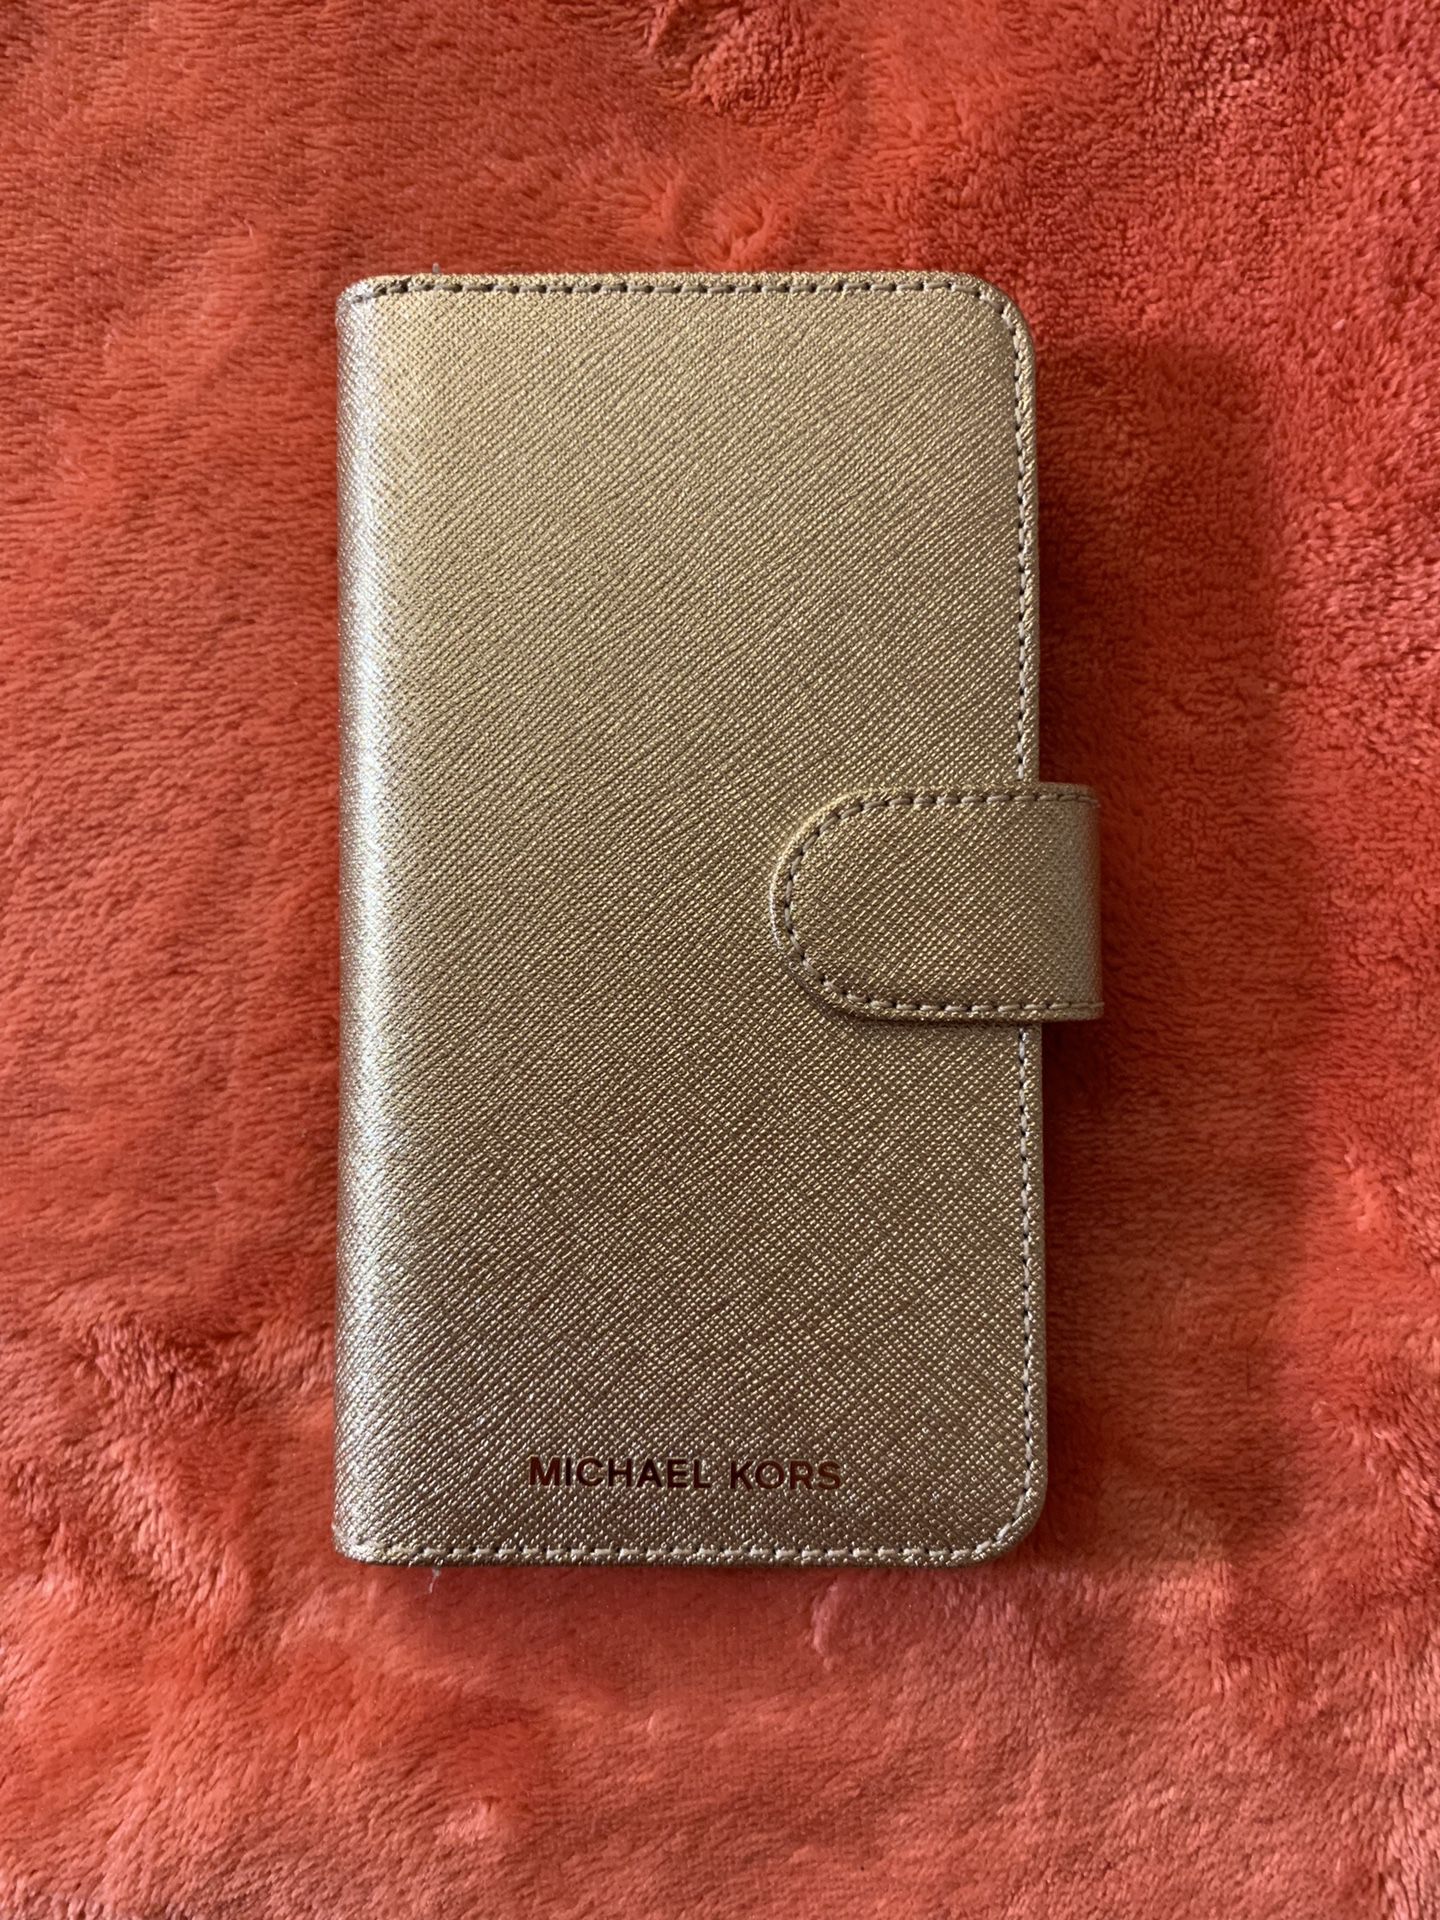 Michael Kors 🎀 iPhone X wallet case